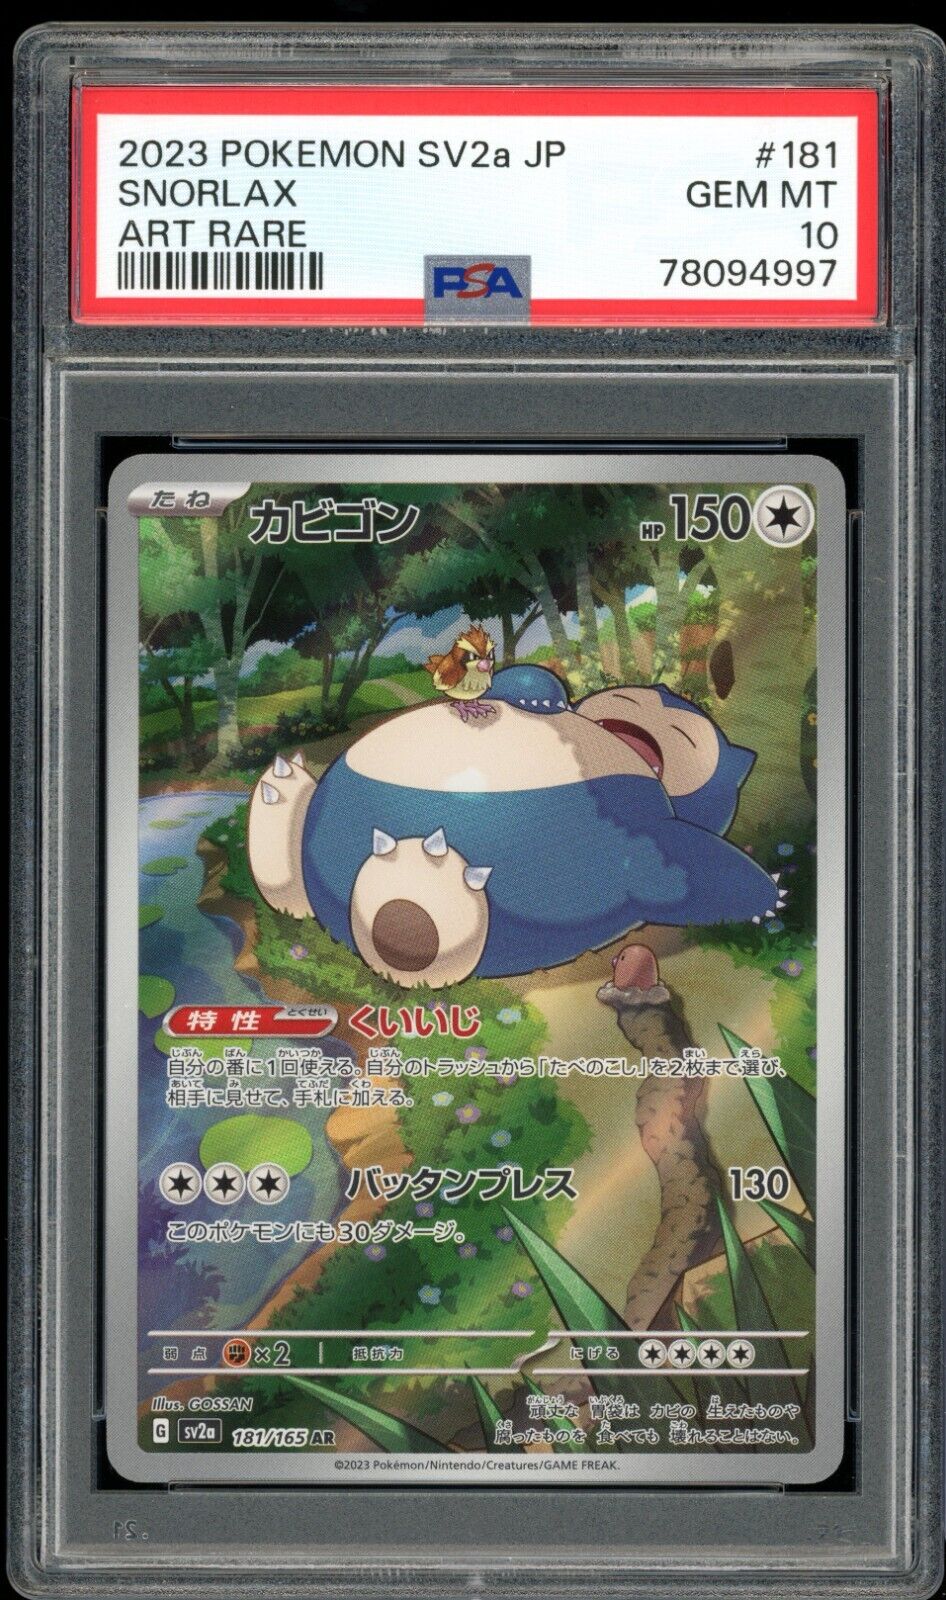 PSA 10 Snorlax 181/165 Art Rare Pokemon Card 151 Japanese GEM MINT